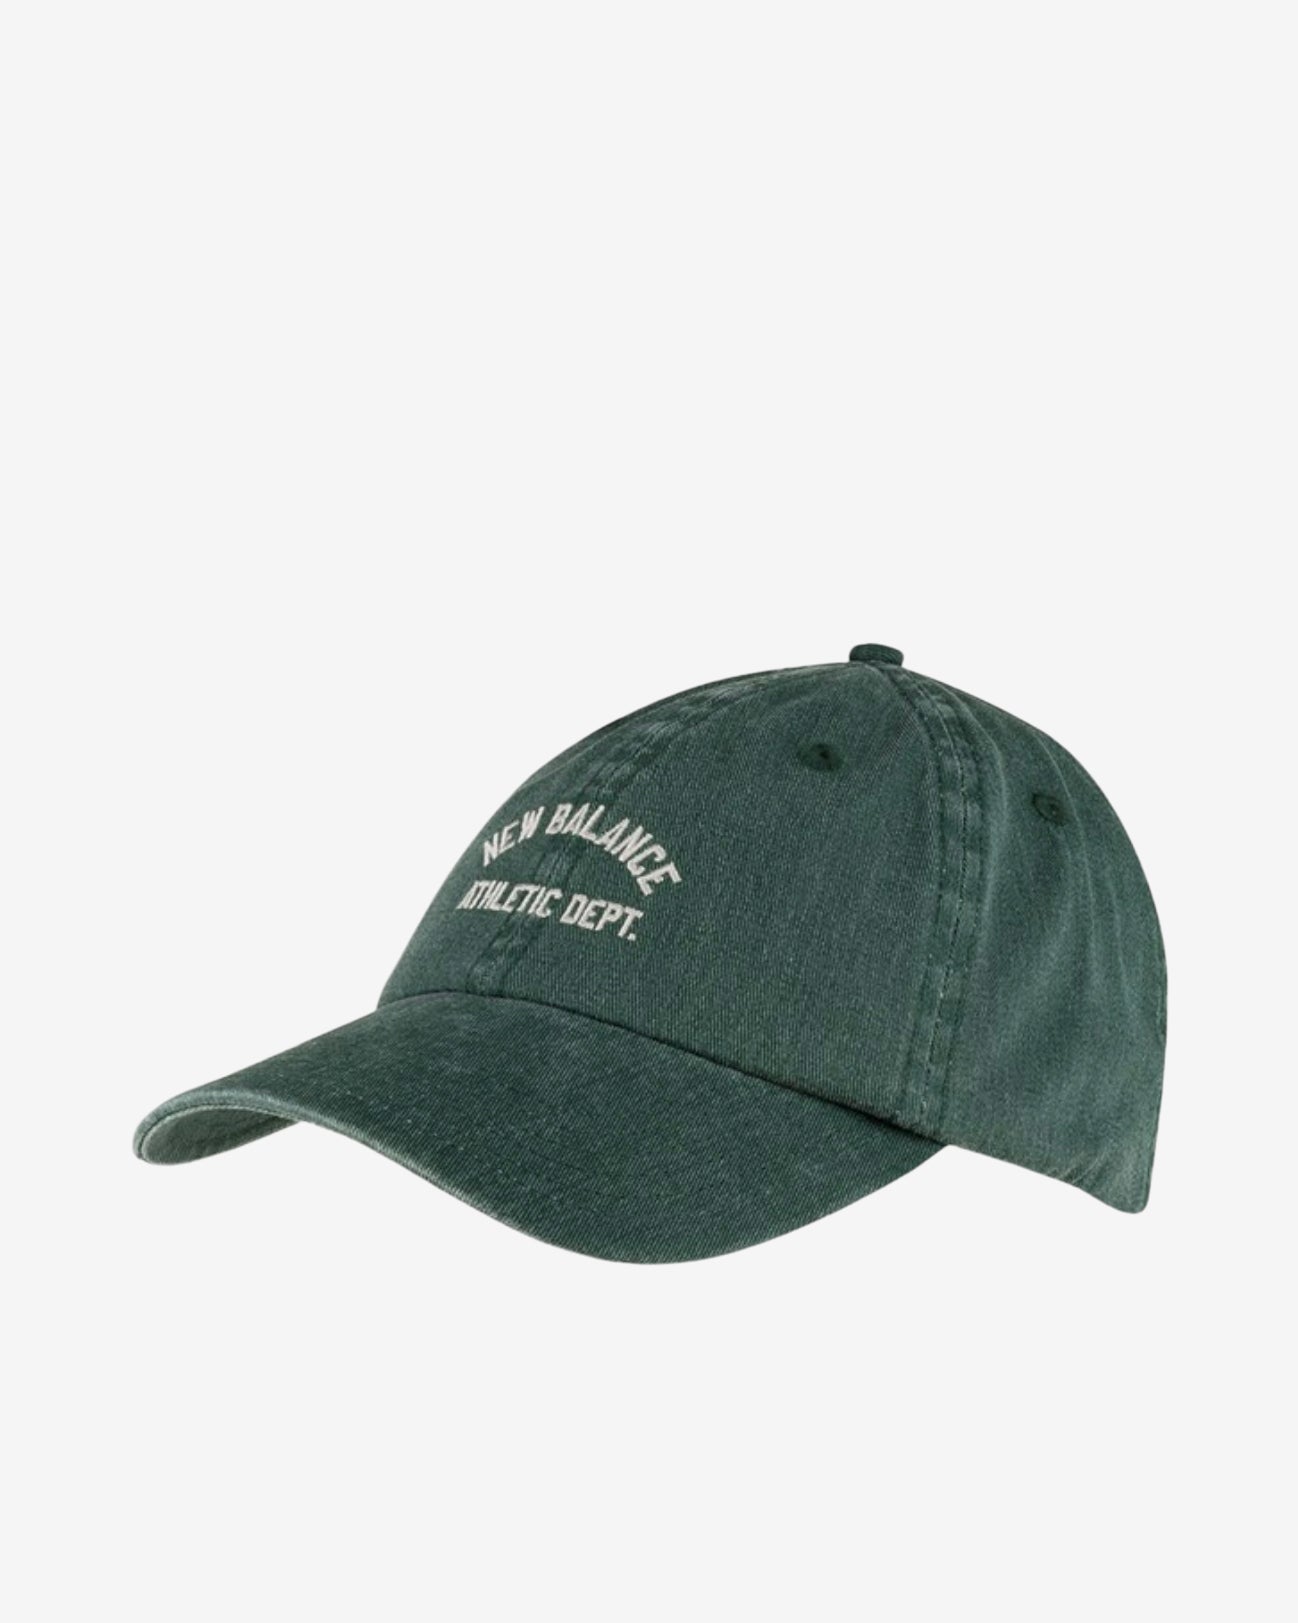 6 PANEL SEASONAL HAT - GREEN